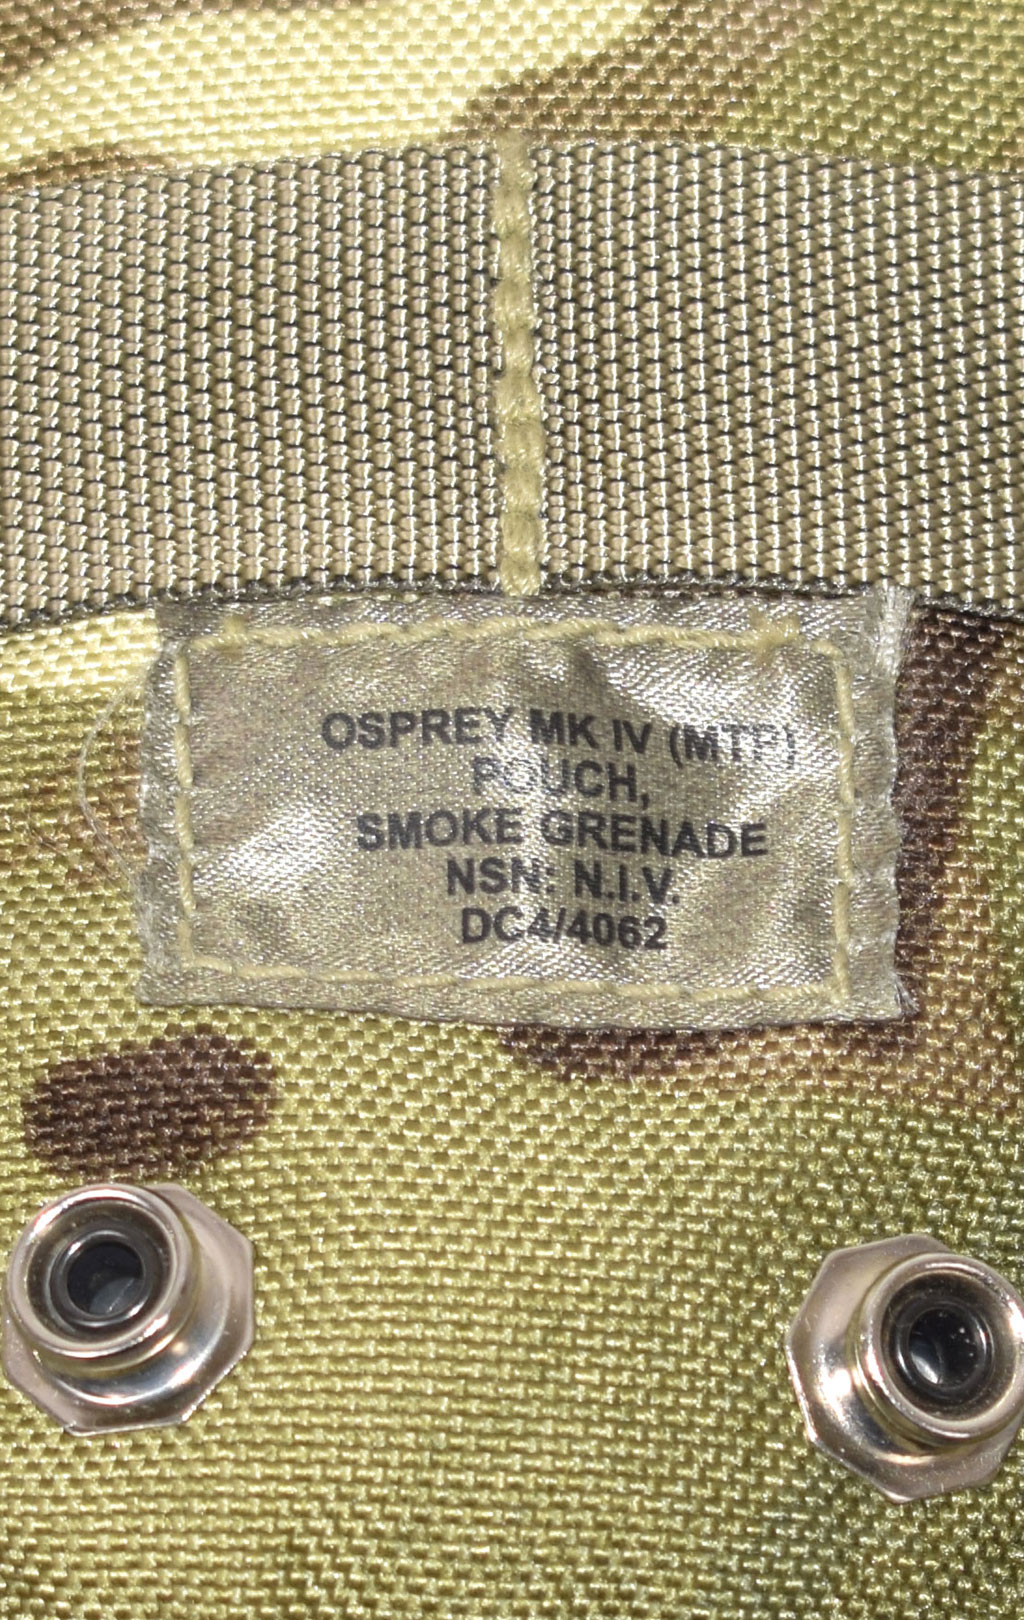 Подсумок гранатный Smocke grenade Osprey MK IV mtp Англия